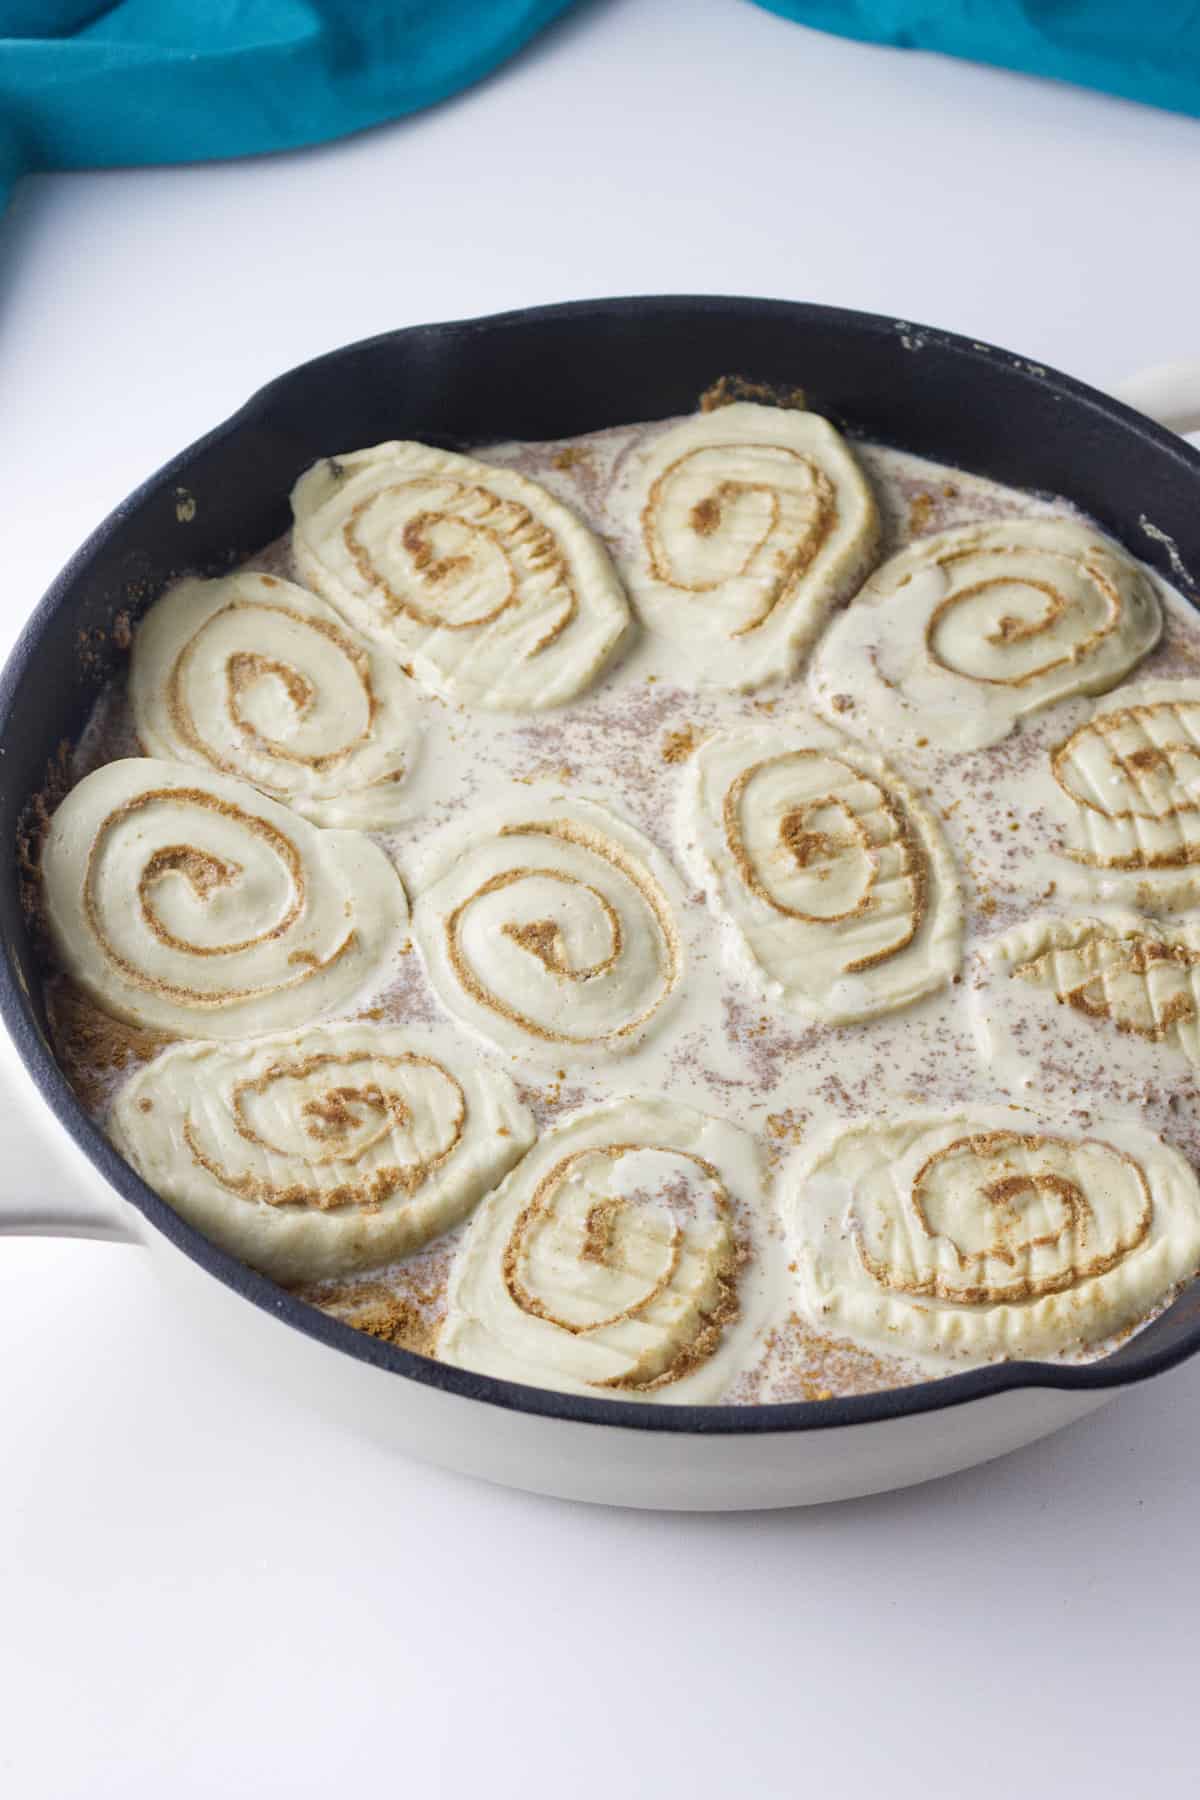 pan of overnight defrosted Rhoads rolls in heavy cream.